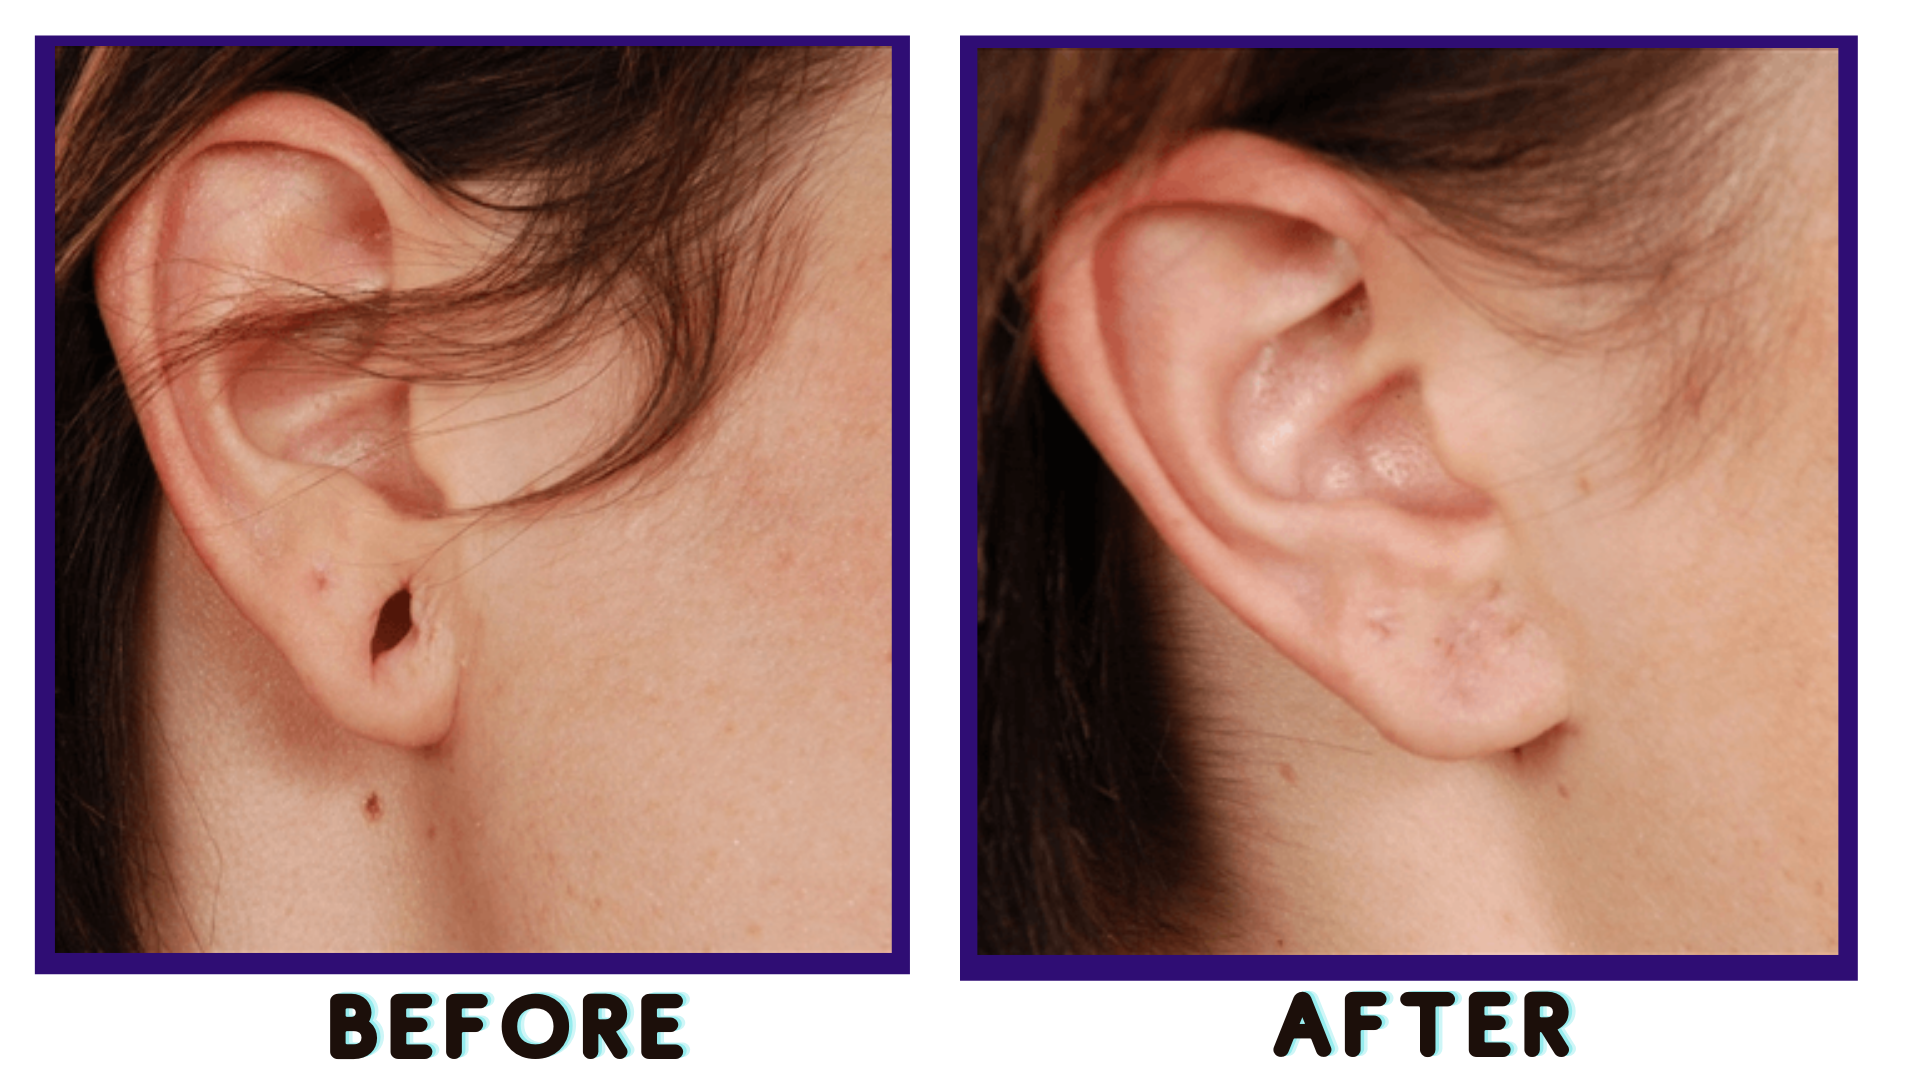 Earlobe repair & Piercing – Curves Cosmetic Surgery, Skin & Laser